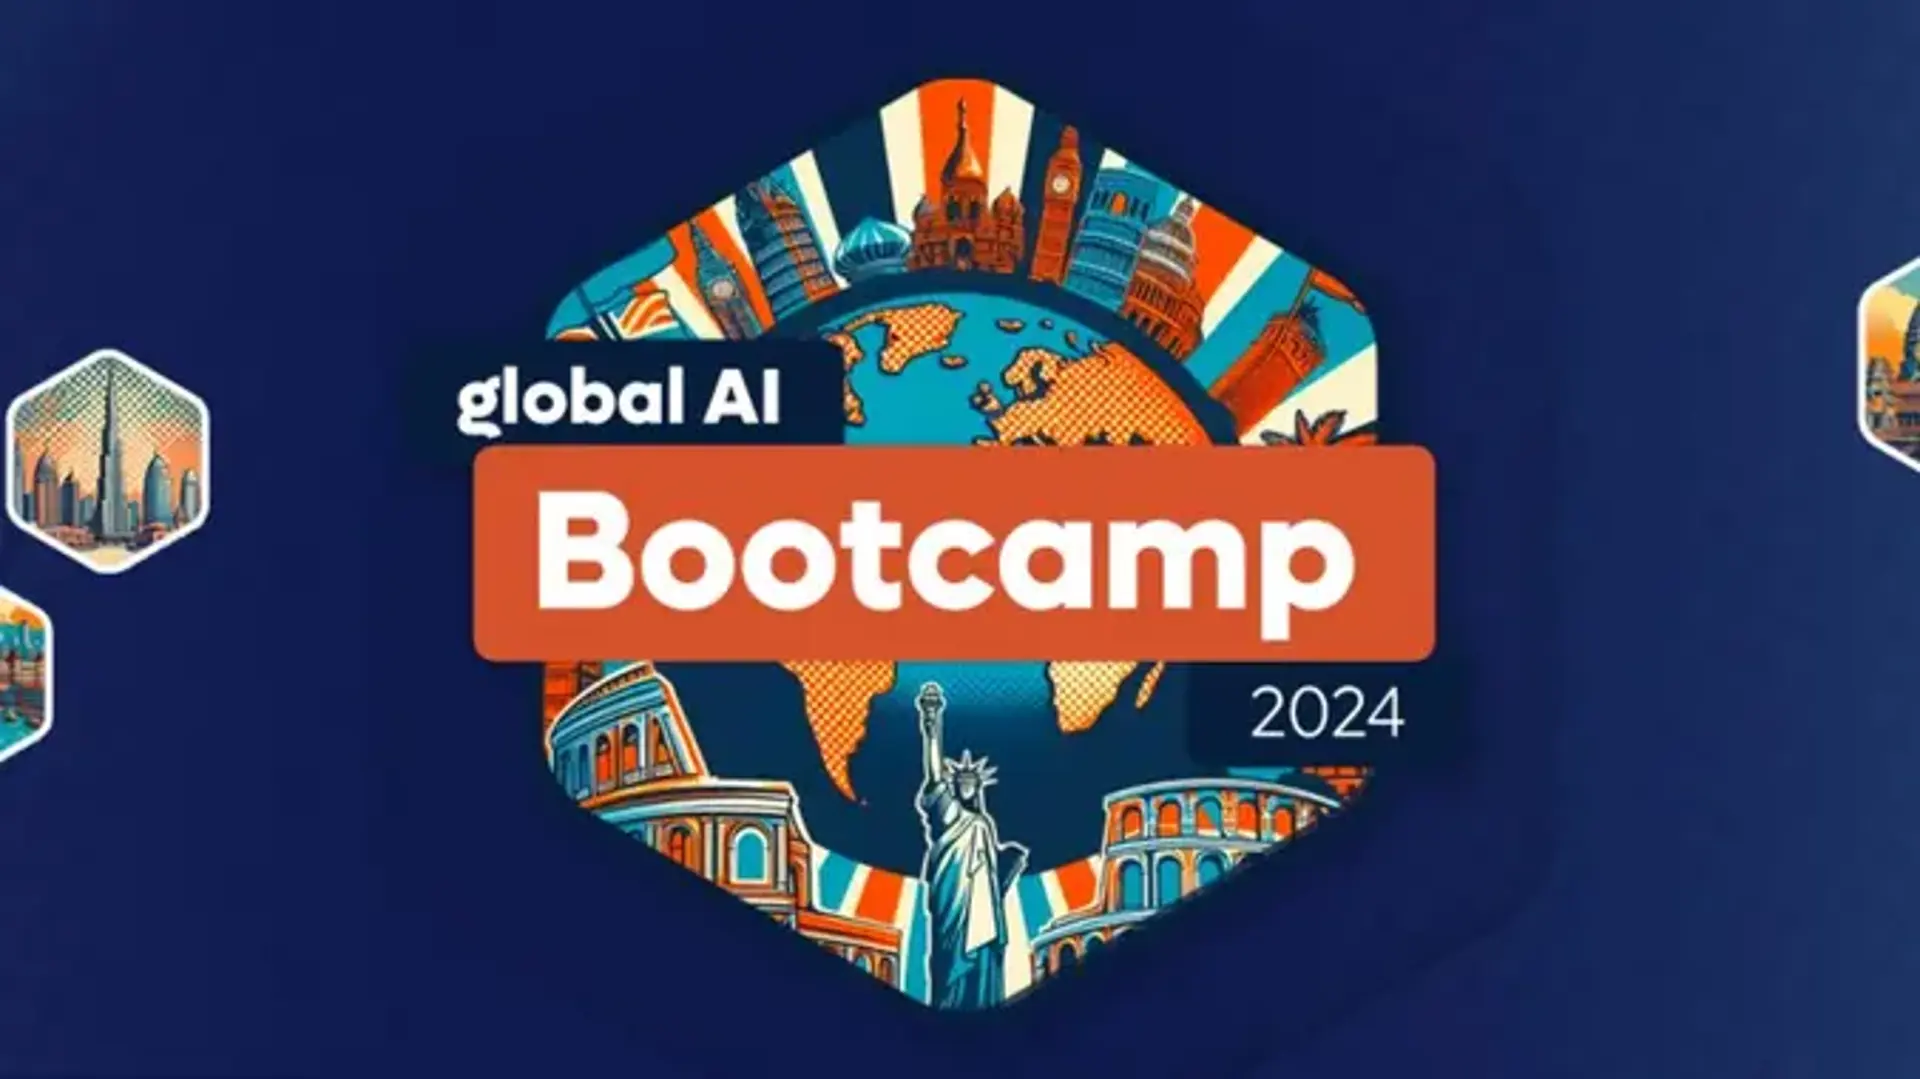 Global AI Bootcamp 2024 Huelva